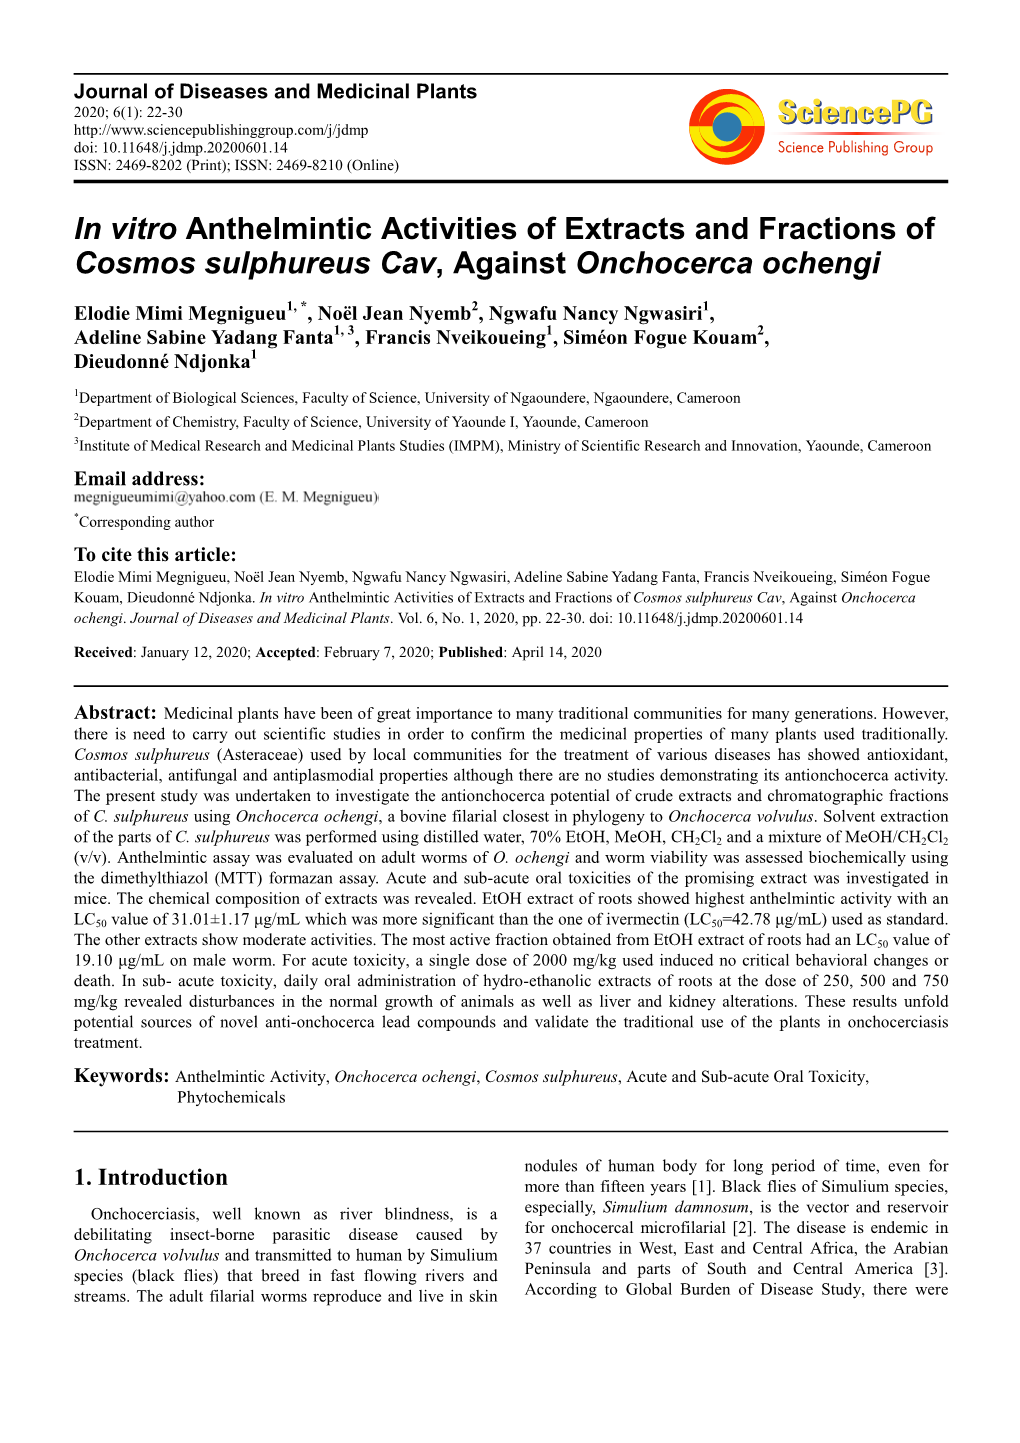 In Vitro Anthelmintic Activities of Extracts and Fractions of Cosmos Sulphureus Cav , Against Onchocerca Ochengi